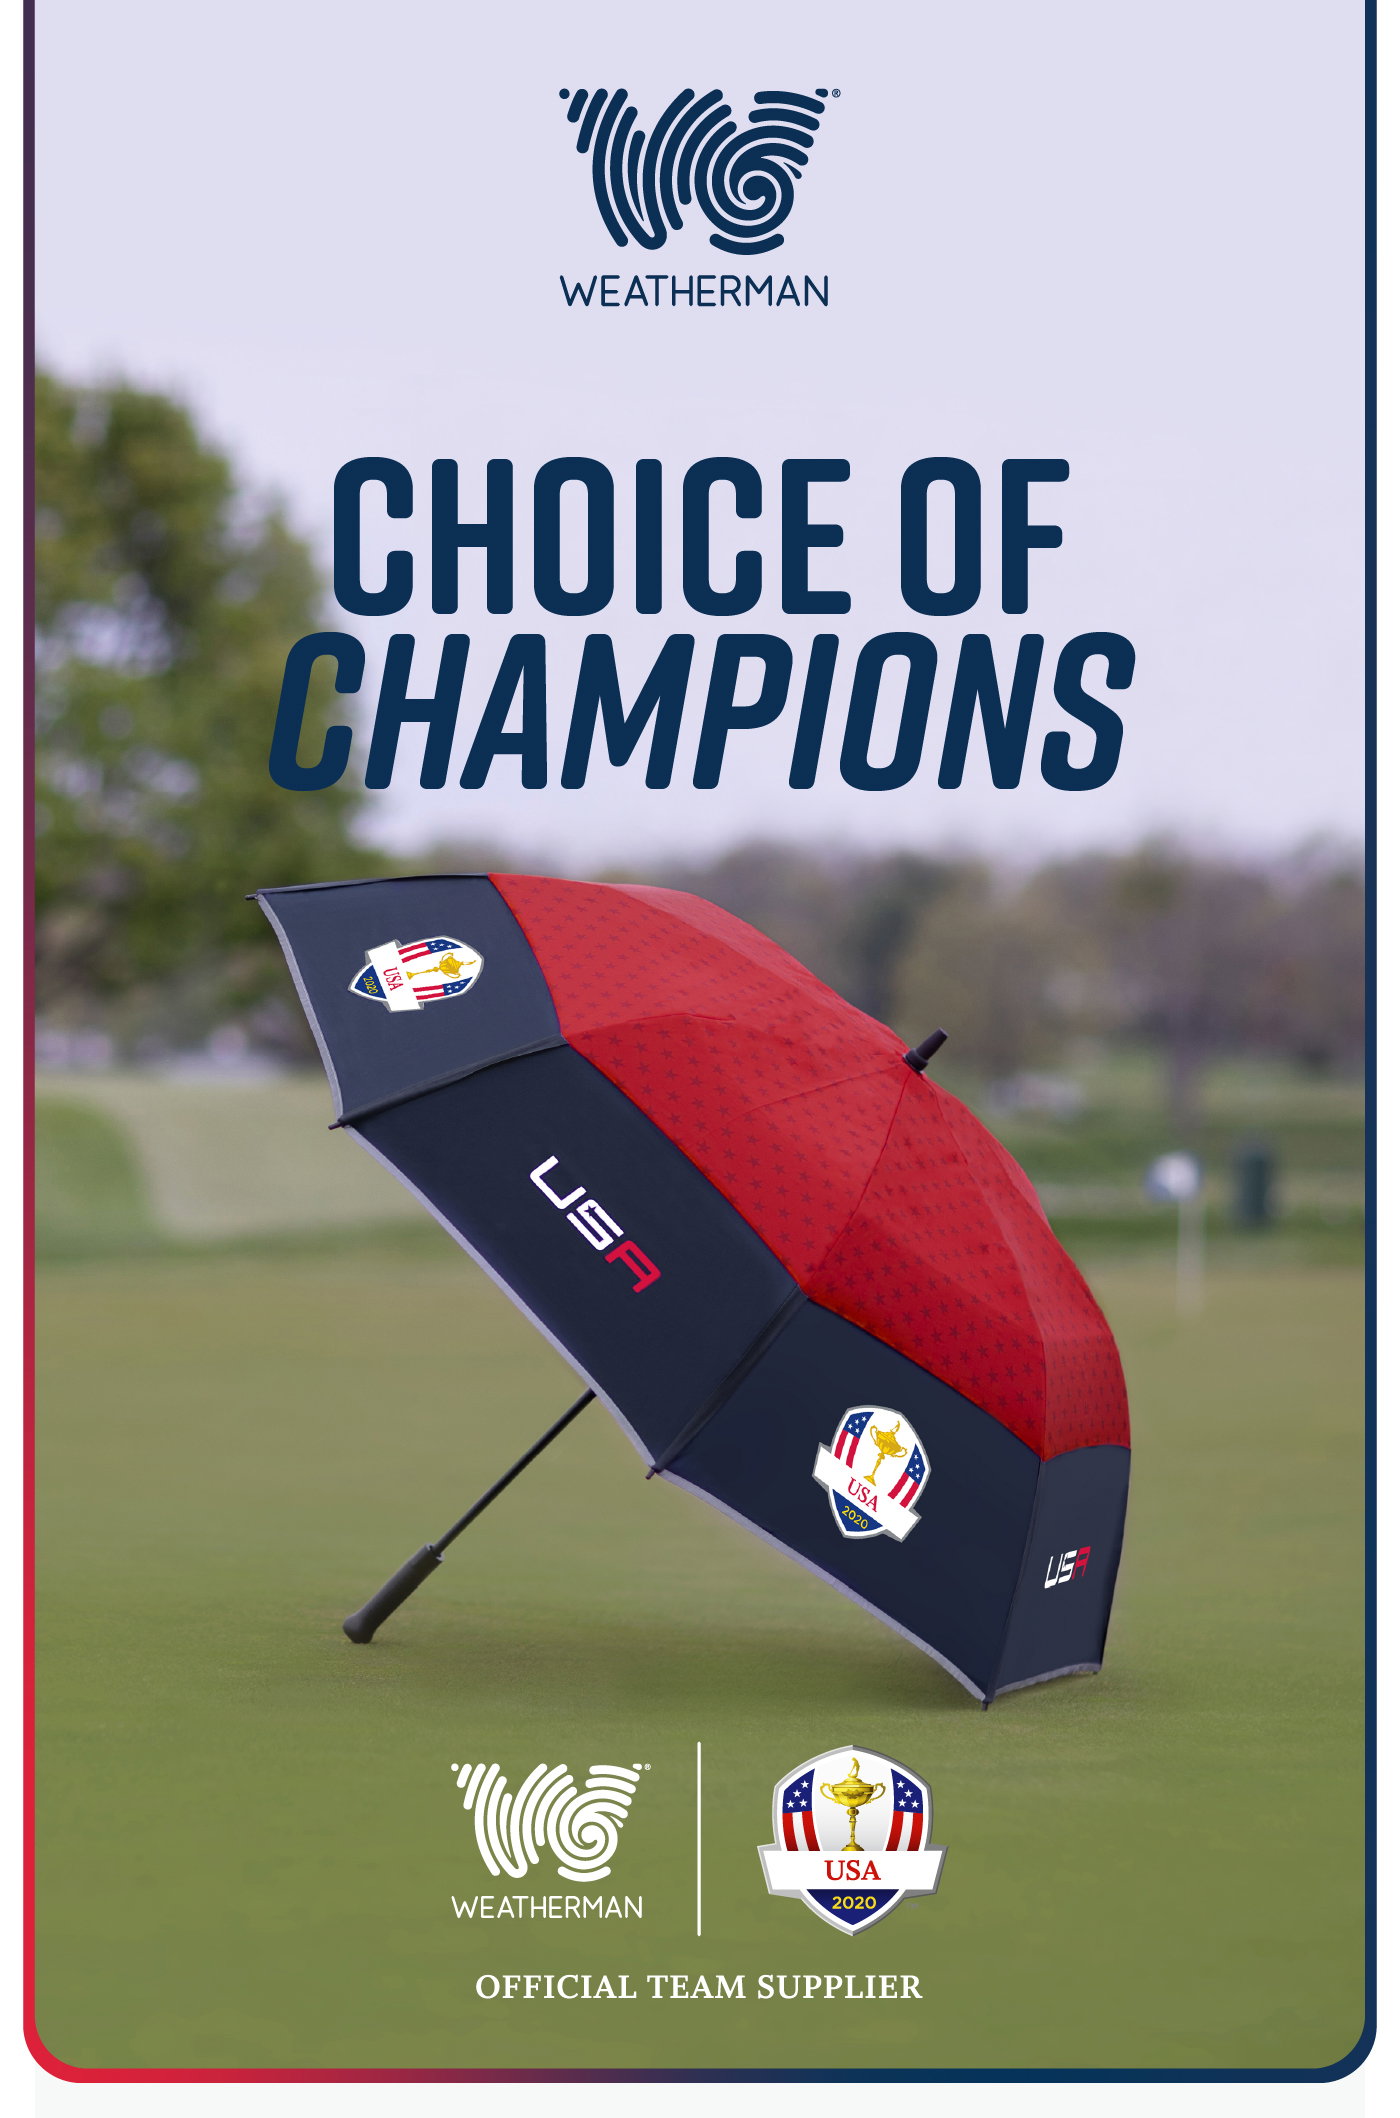 Folds of Honor Golf Umbrella Freedom